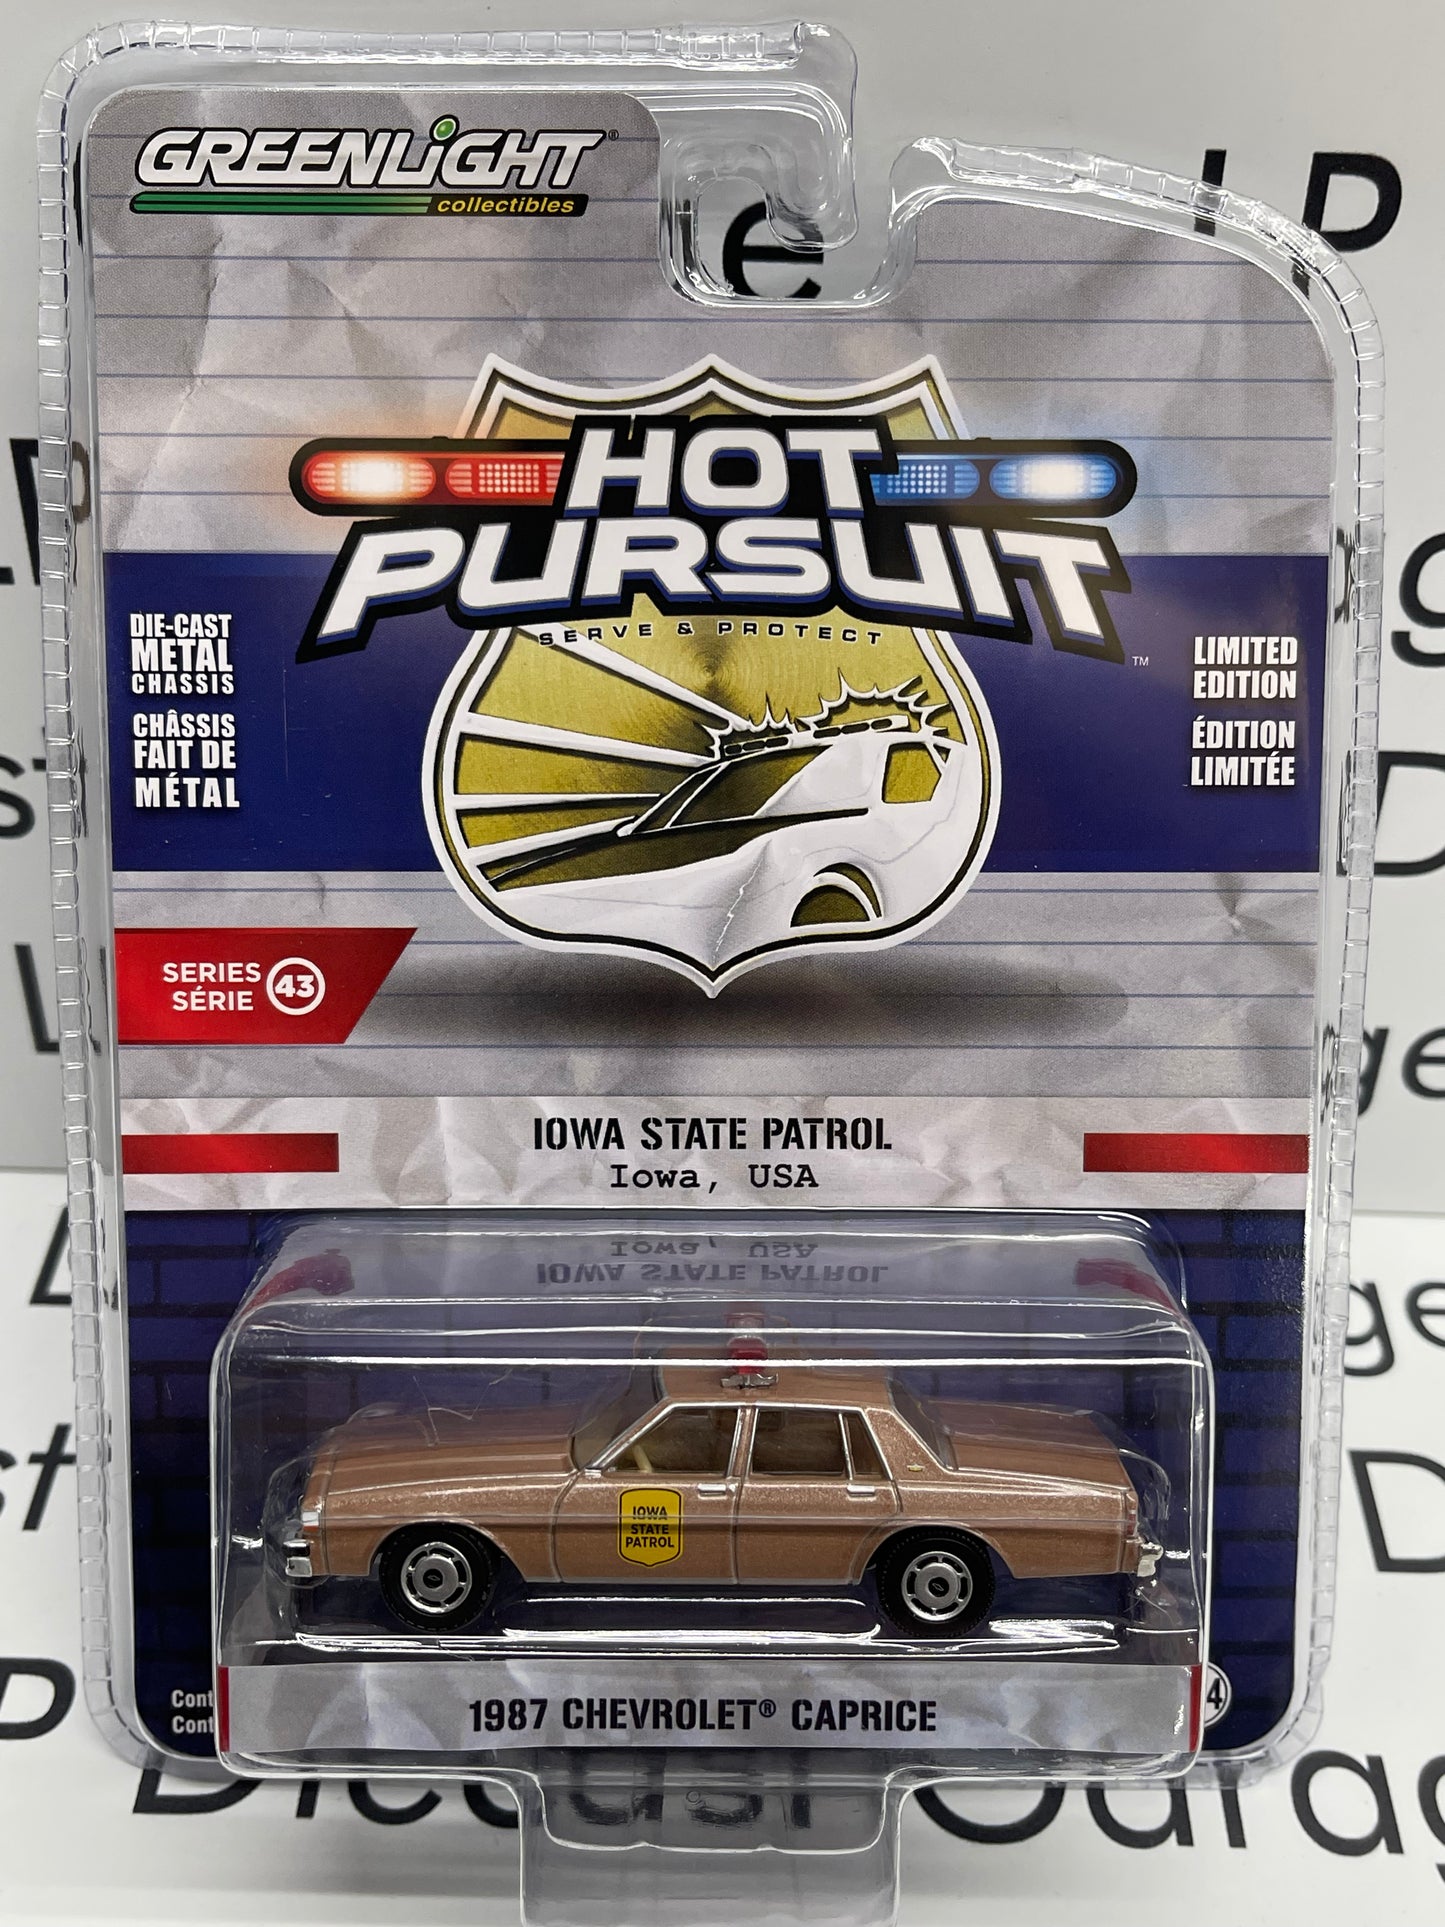 GREENLIGHT 1987 Chevrolet Caprice Iowa State Patrol Police Car Hot Pursuit 1:64 Diecast